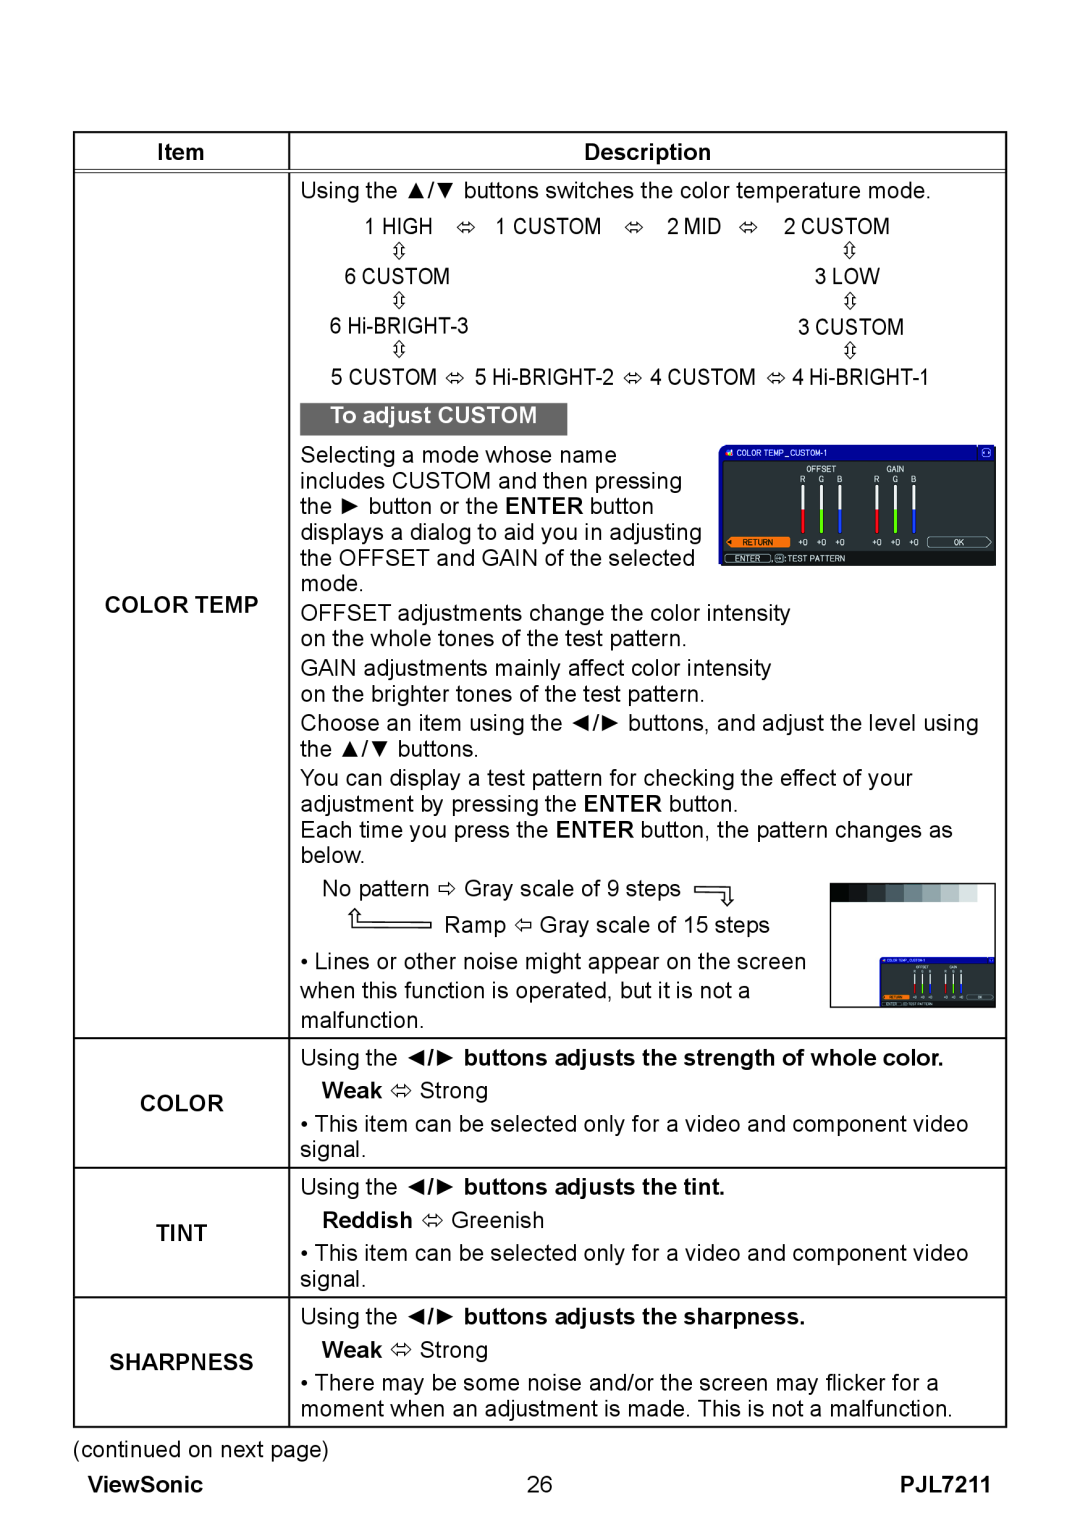 ViewSonic PJL7211 Item, Description, To adjust CUSTOM, Color Temp, Using the / buttons adjusts the tint, Tint, Sharpness 